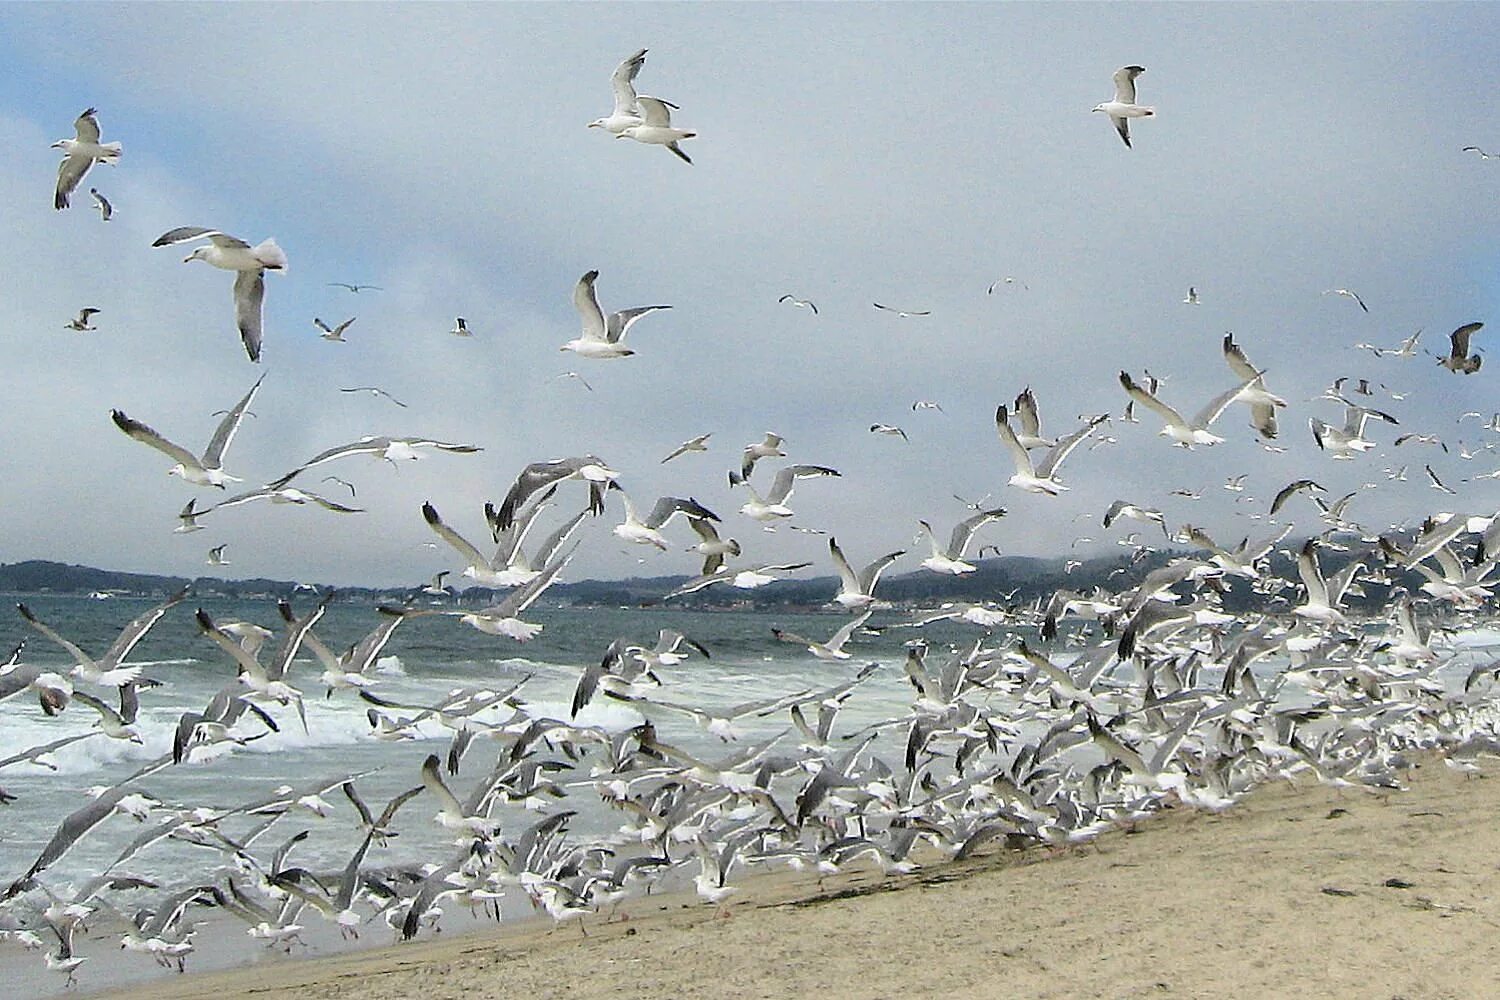 Flock of birds. Стая птиц. Стаи птиц и море. Миграция птиц. Стайка птиц.